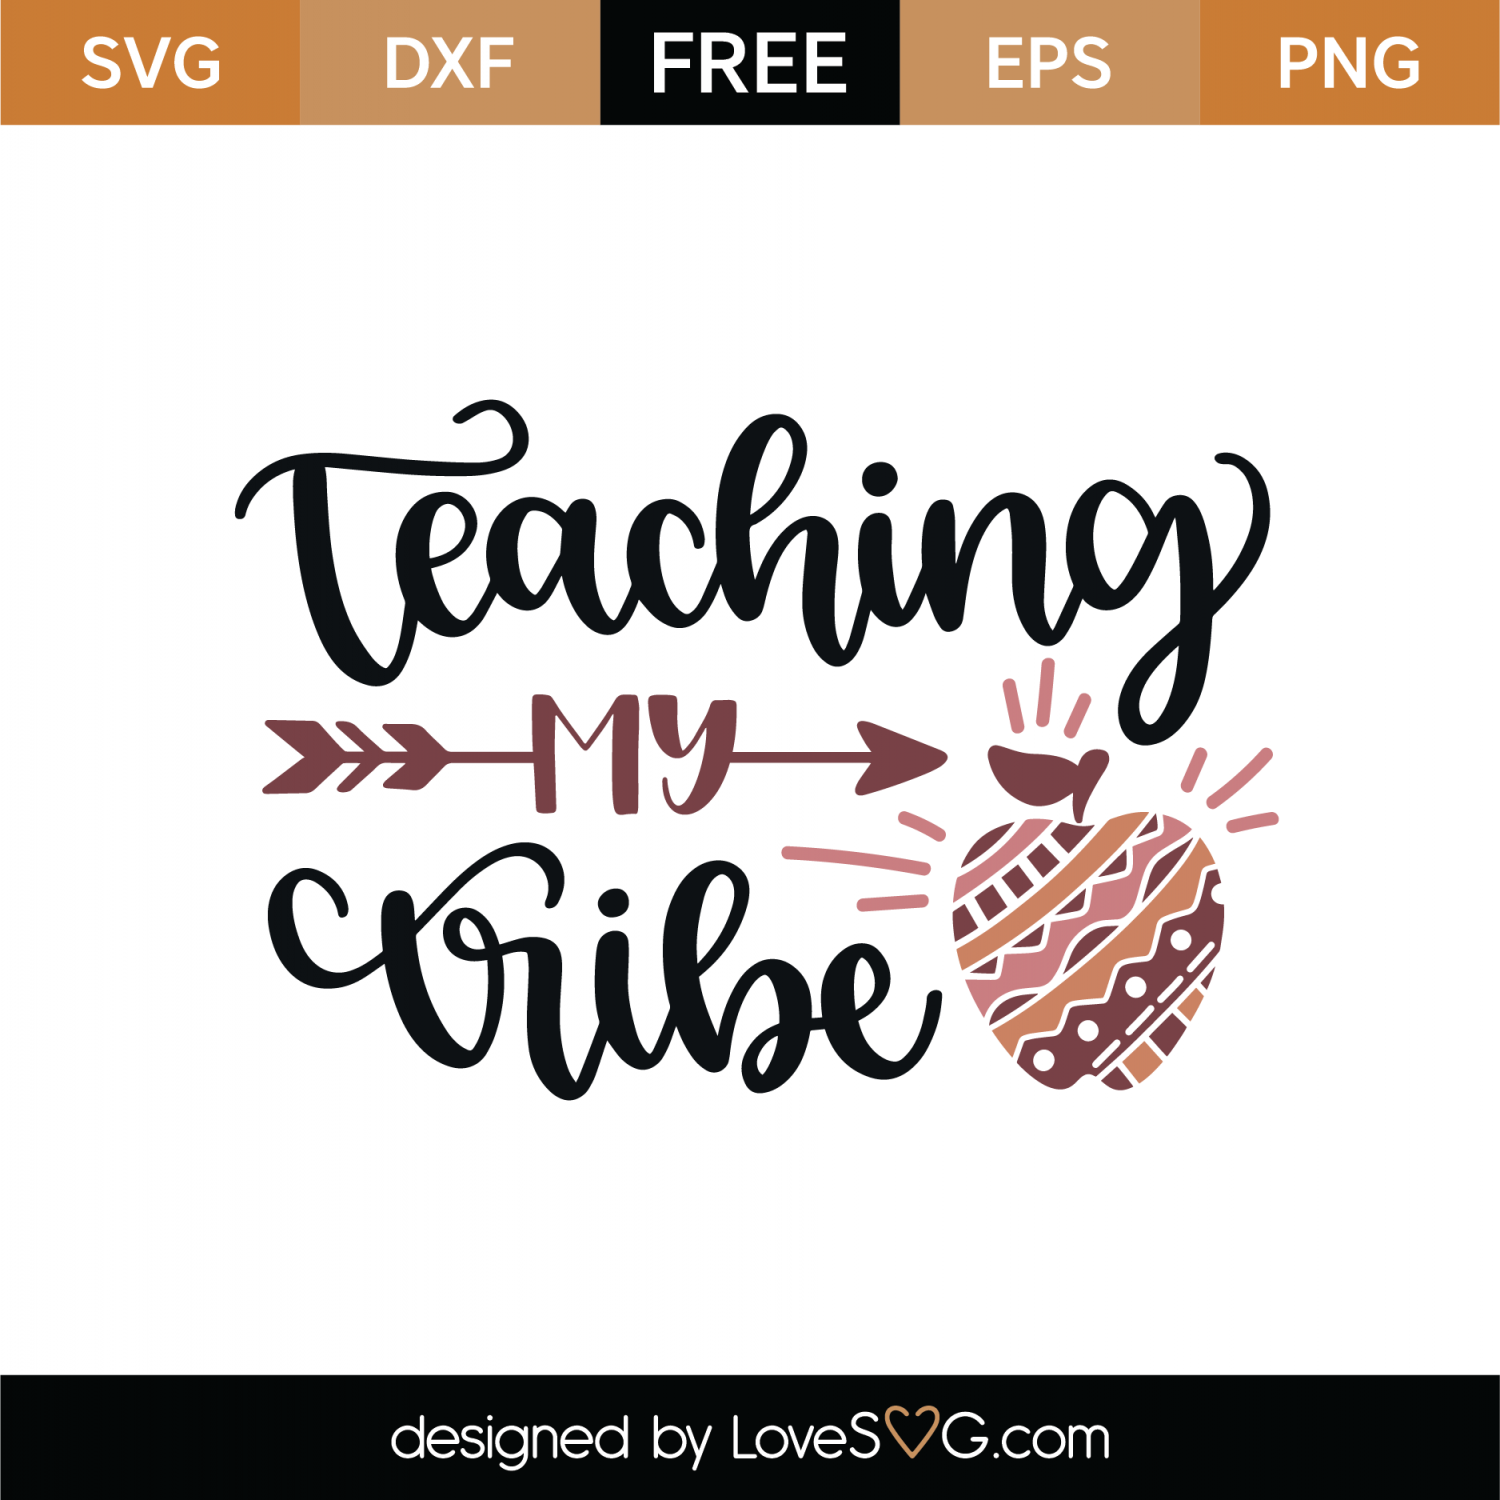 Free Teaching My Tribe SVG Cut File | Lovesvg.com